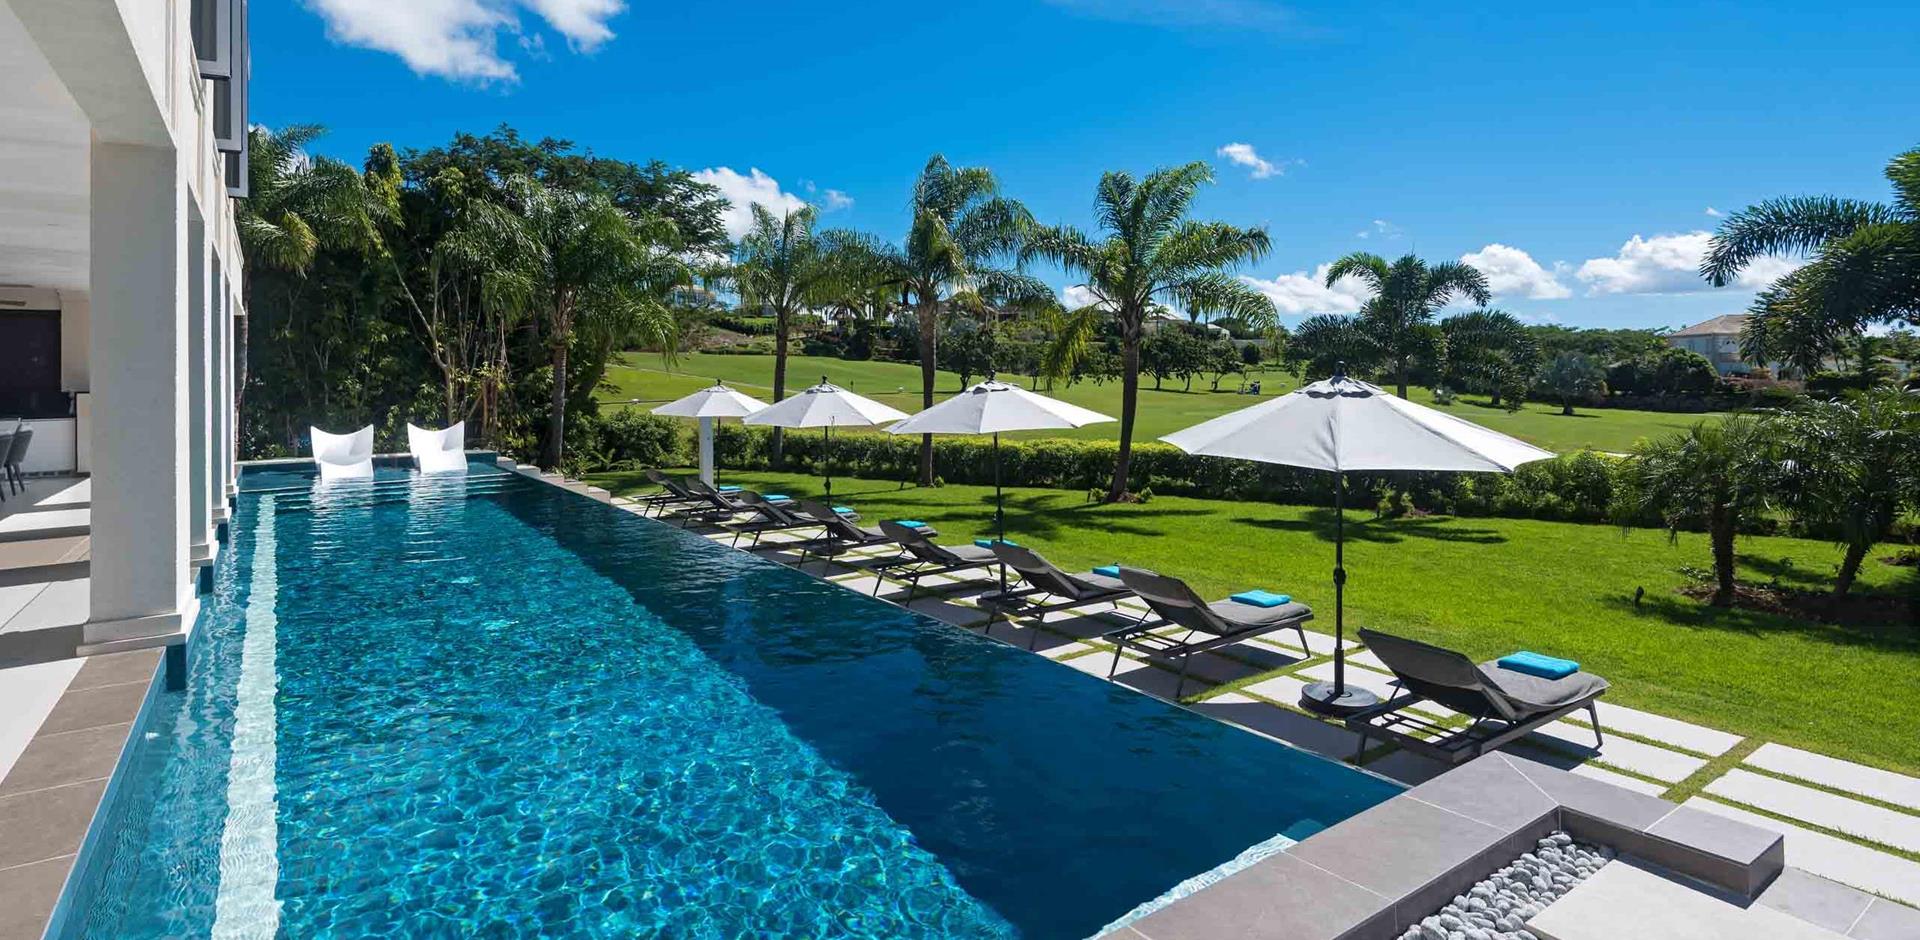 Pool area, Villa Turquoise, Barbados, Caribbean